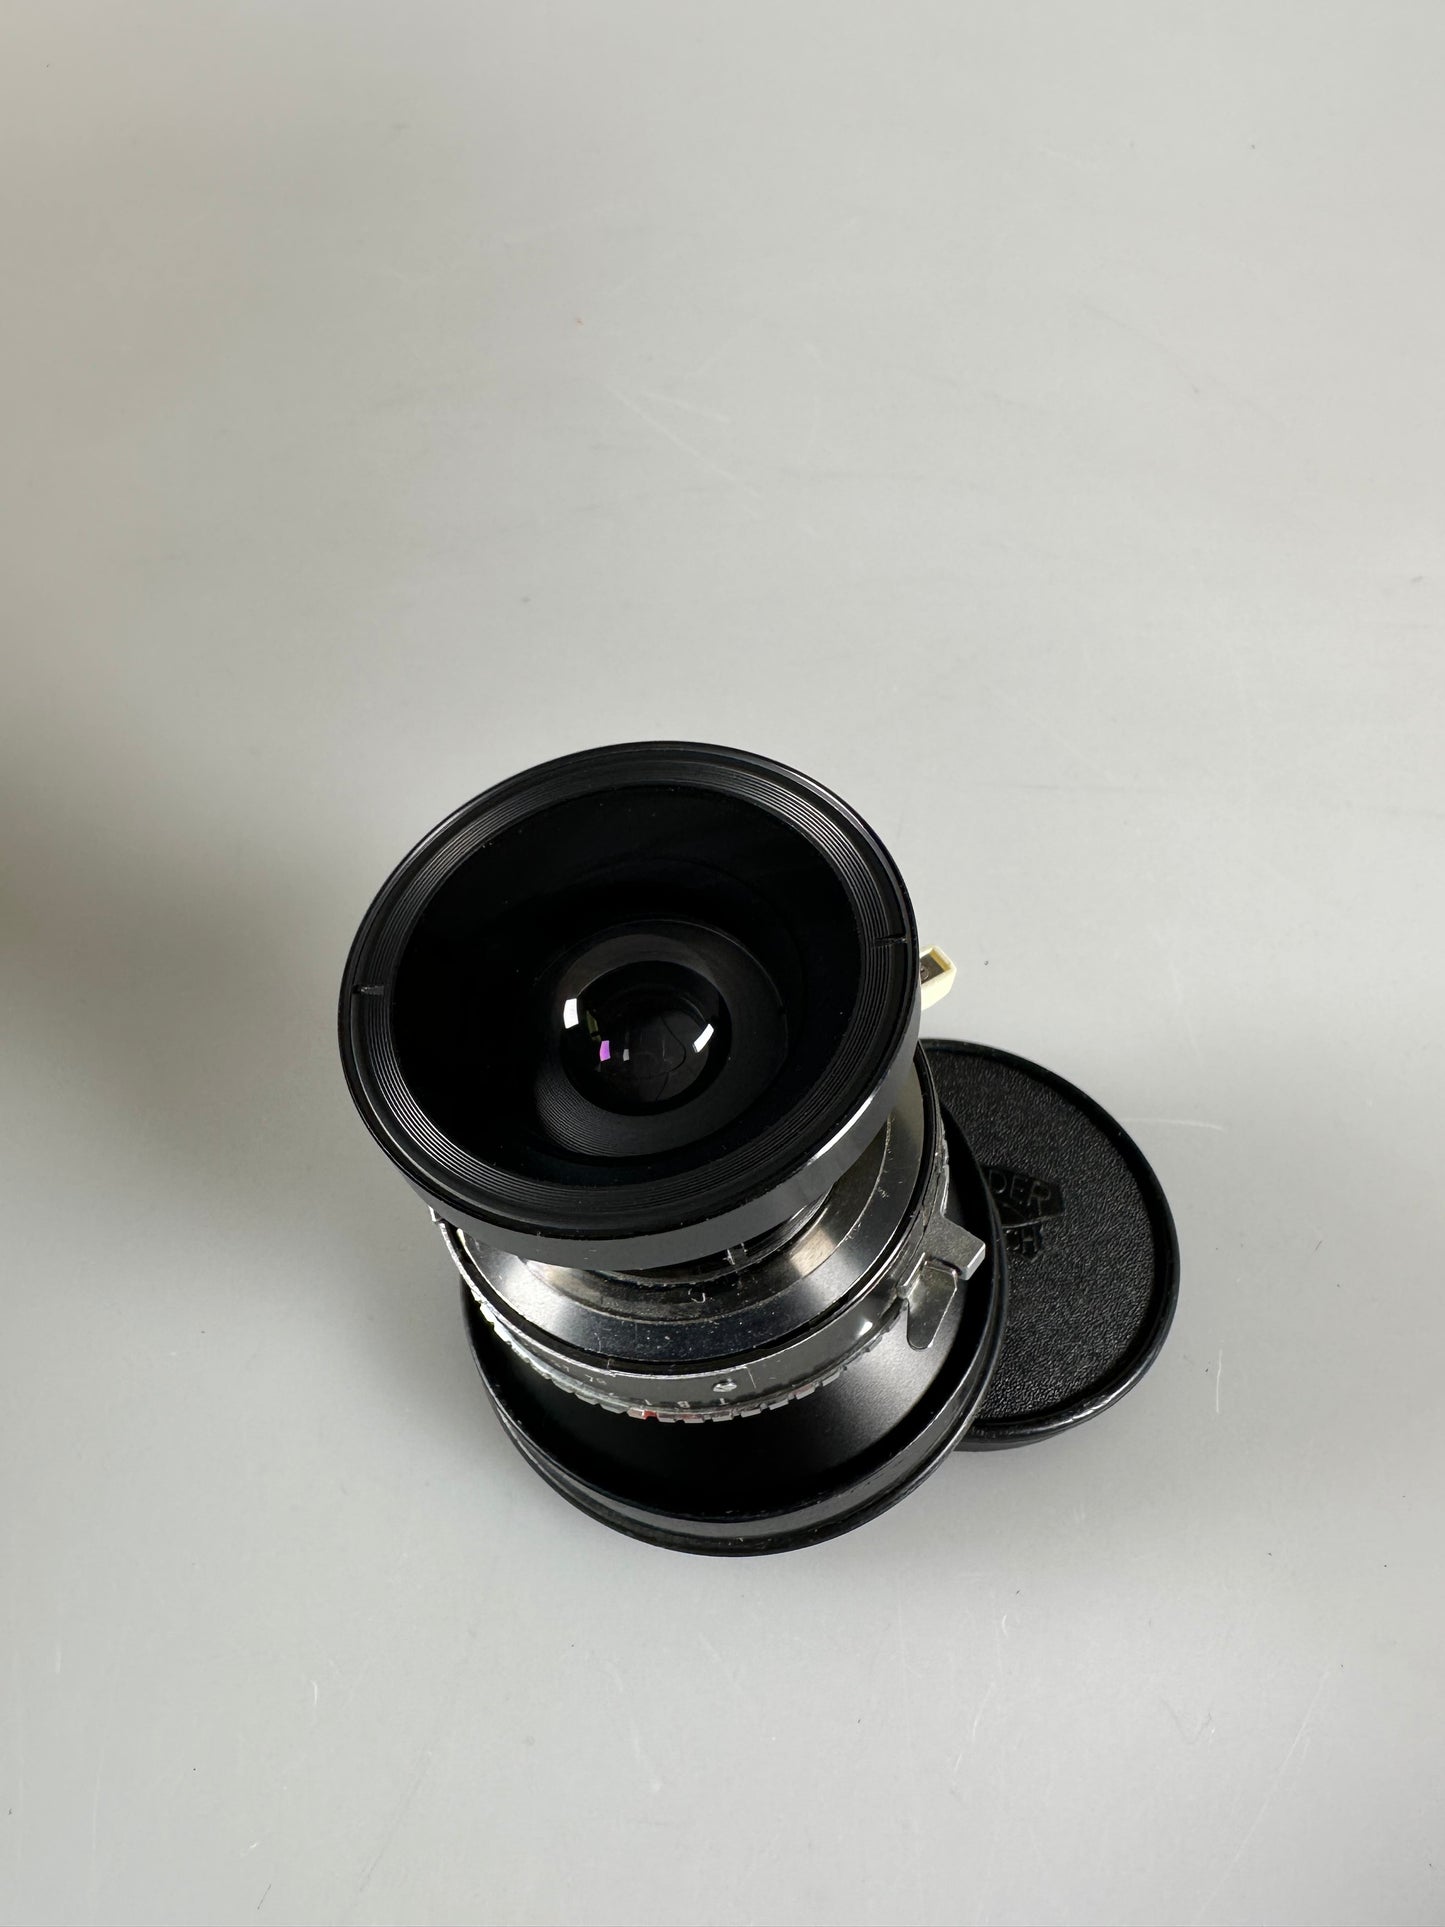 Schneider 90mm f8 Super Angulon Lens 90/8